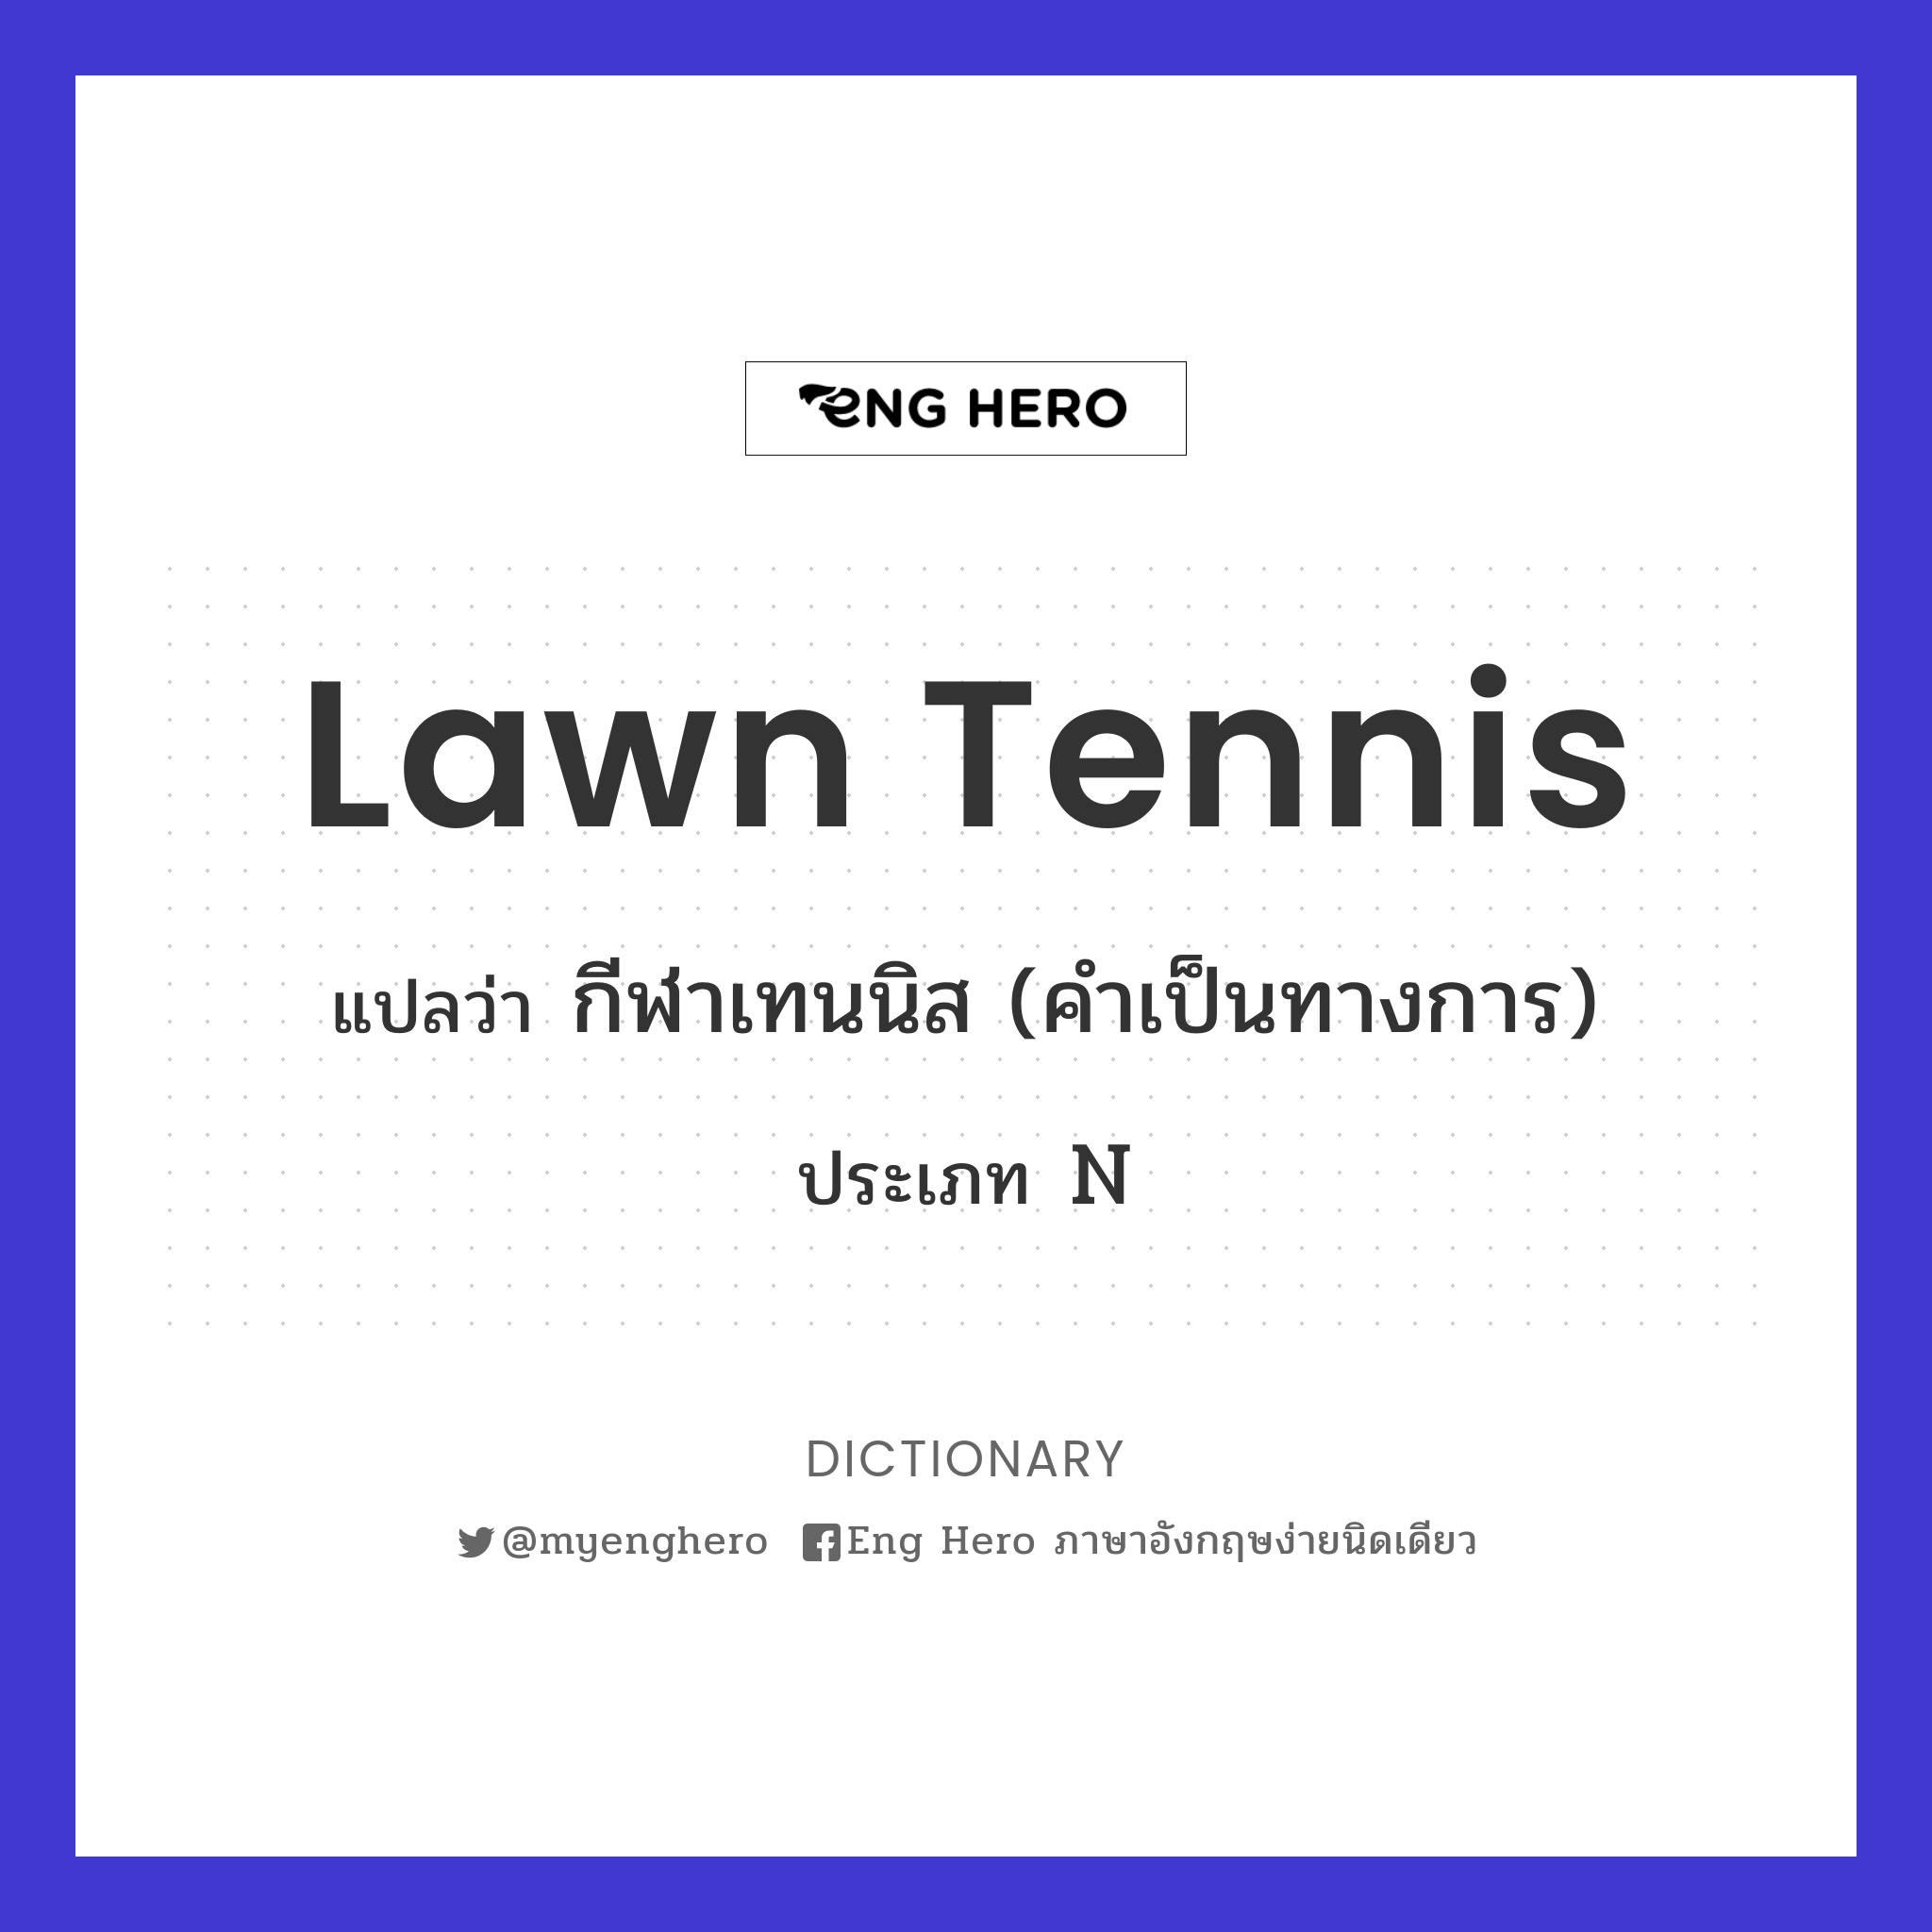 lawn tennis